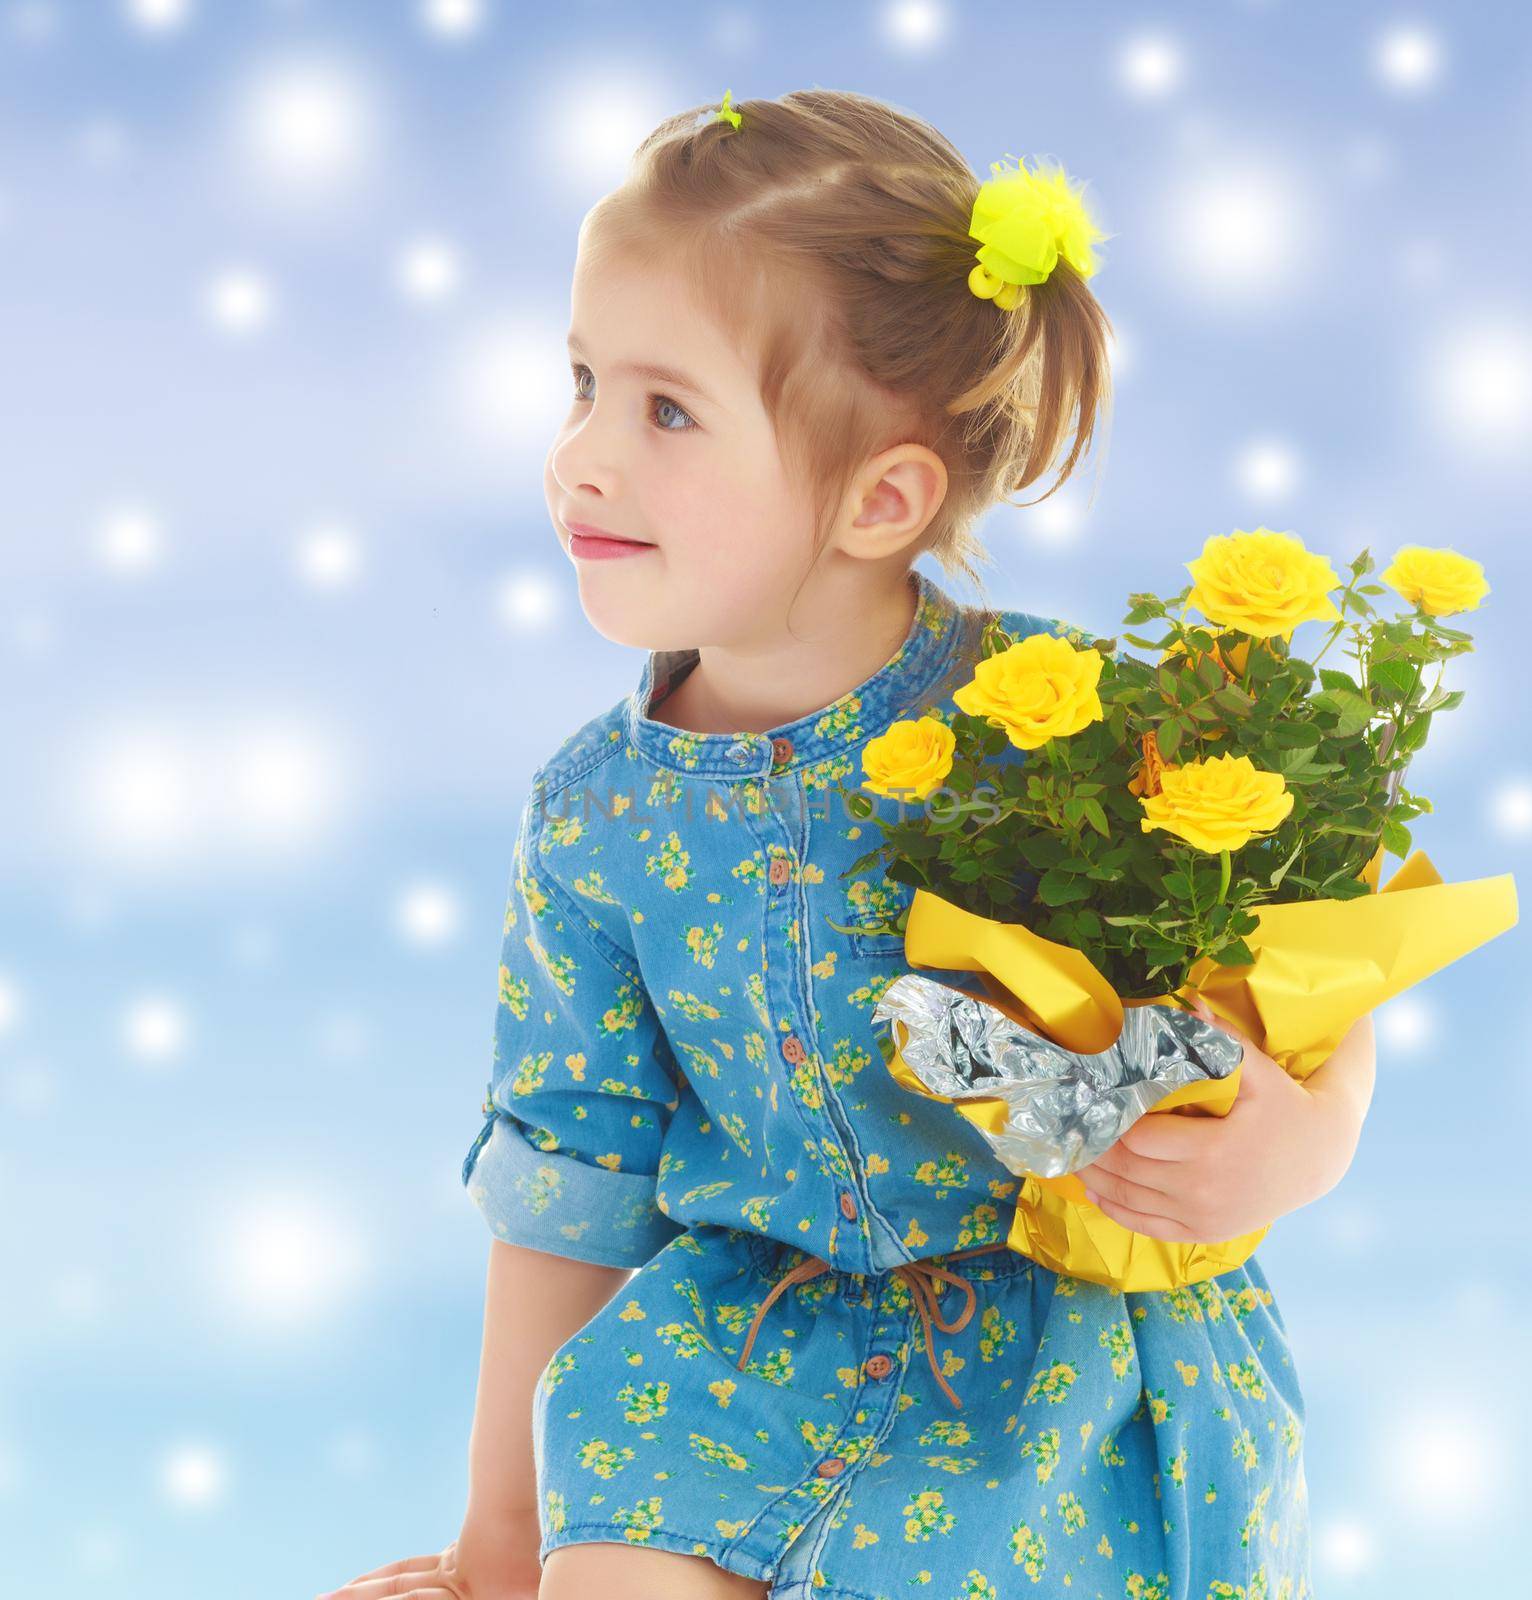 Girl with a bouquet of yellow flowers by kolesnikov_studio